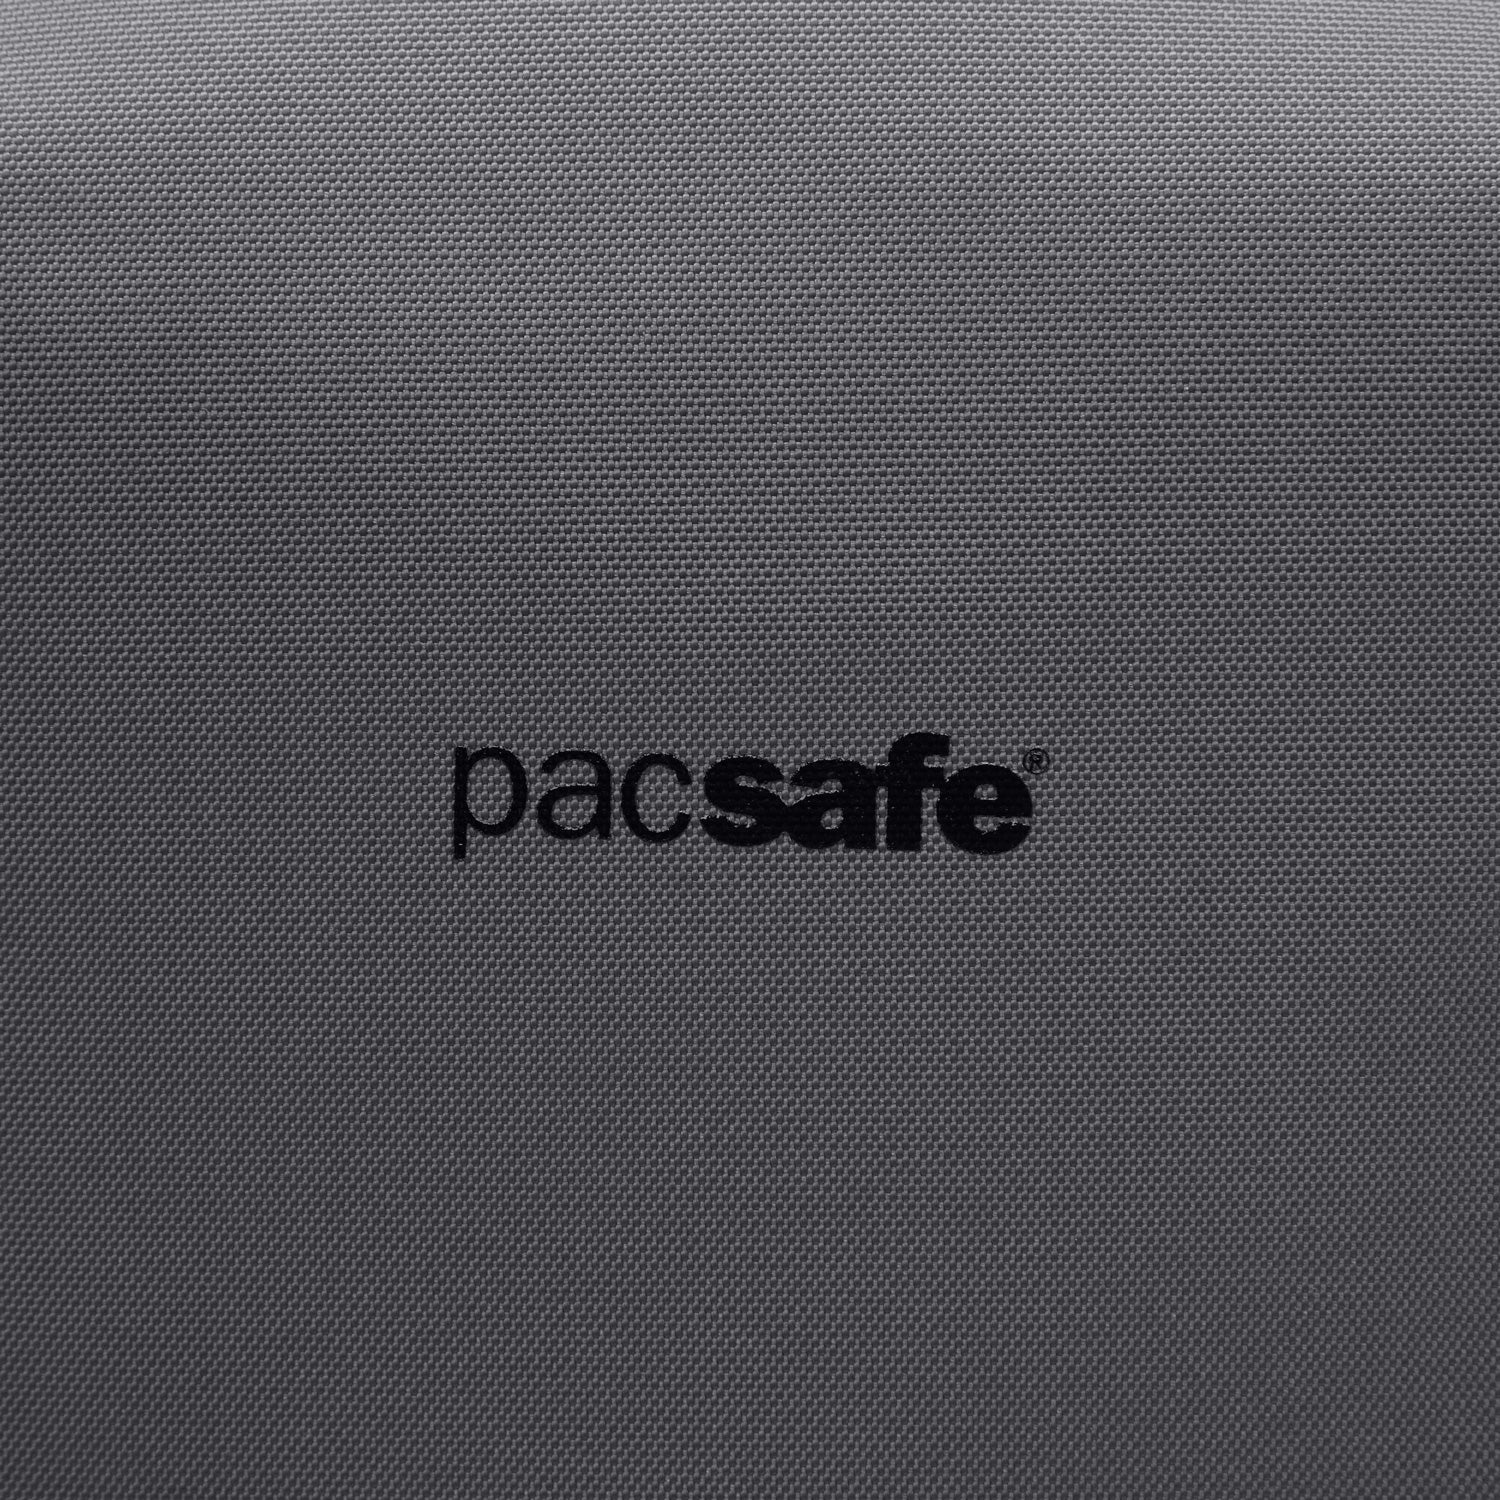 Pacsafe - Vibe 25L Backpack - Slate-9